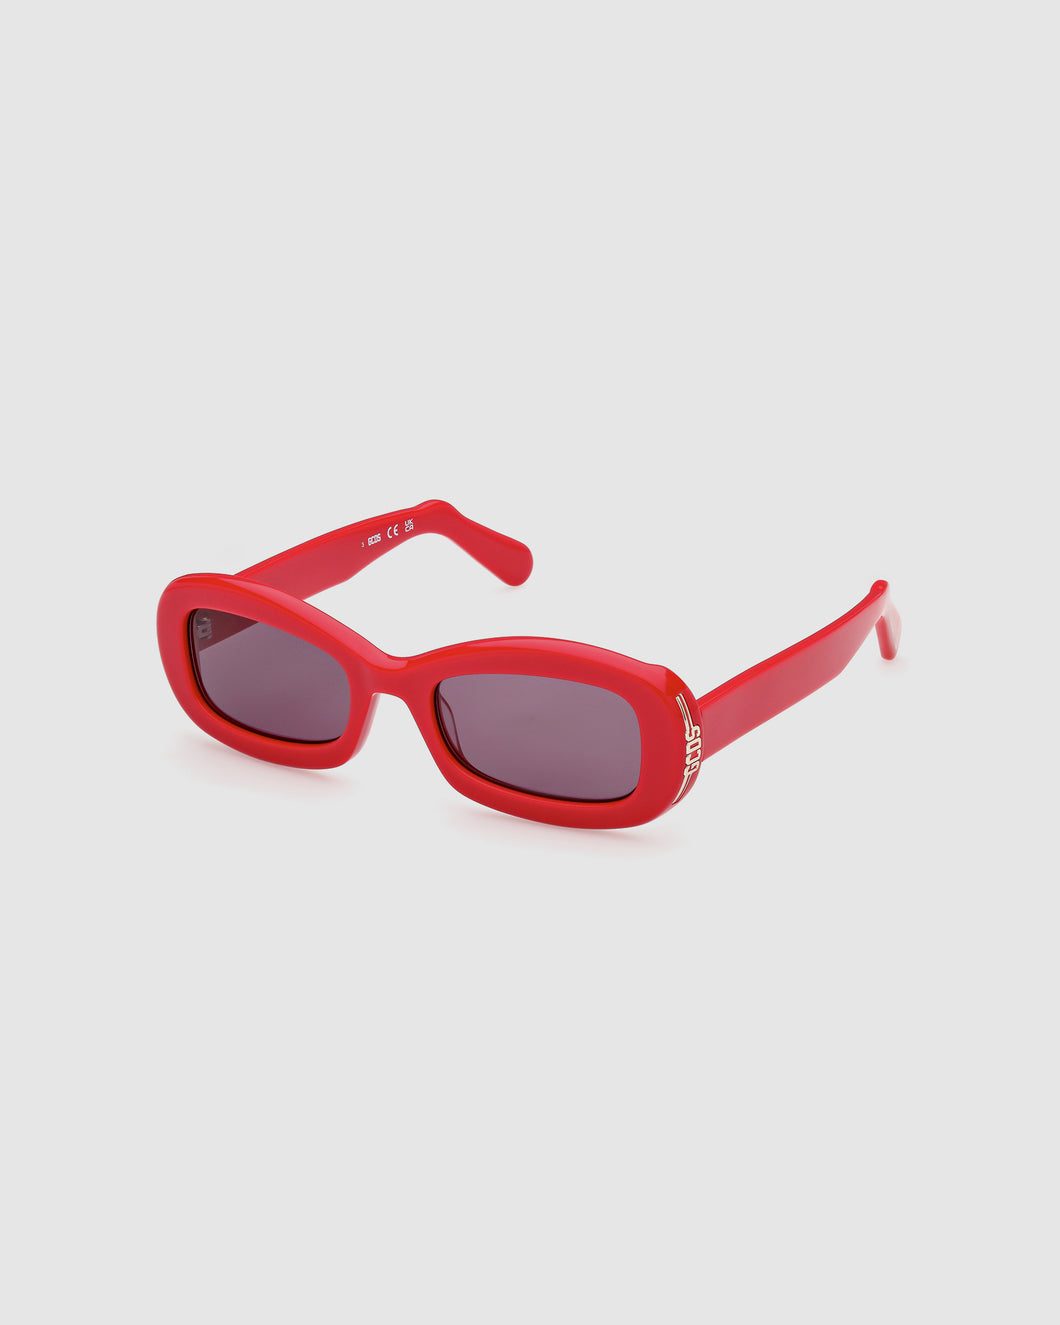 GD0027 Oval sunglasses : Unisex Sunglasses Red  | GCDS